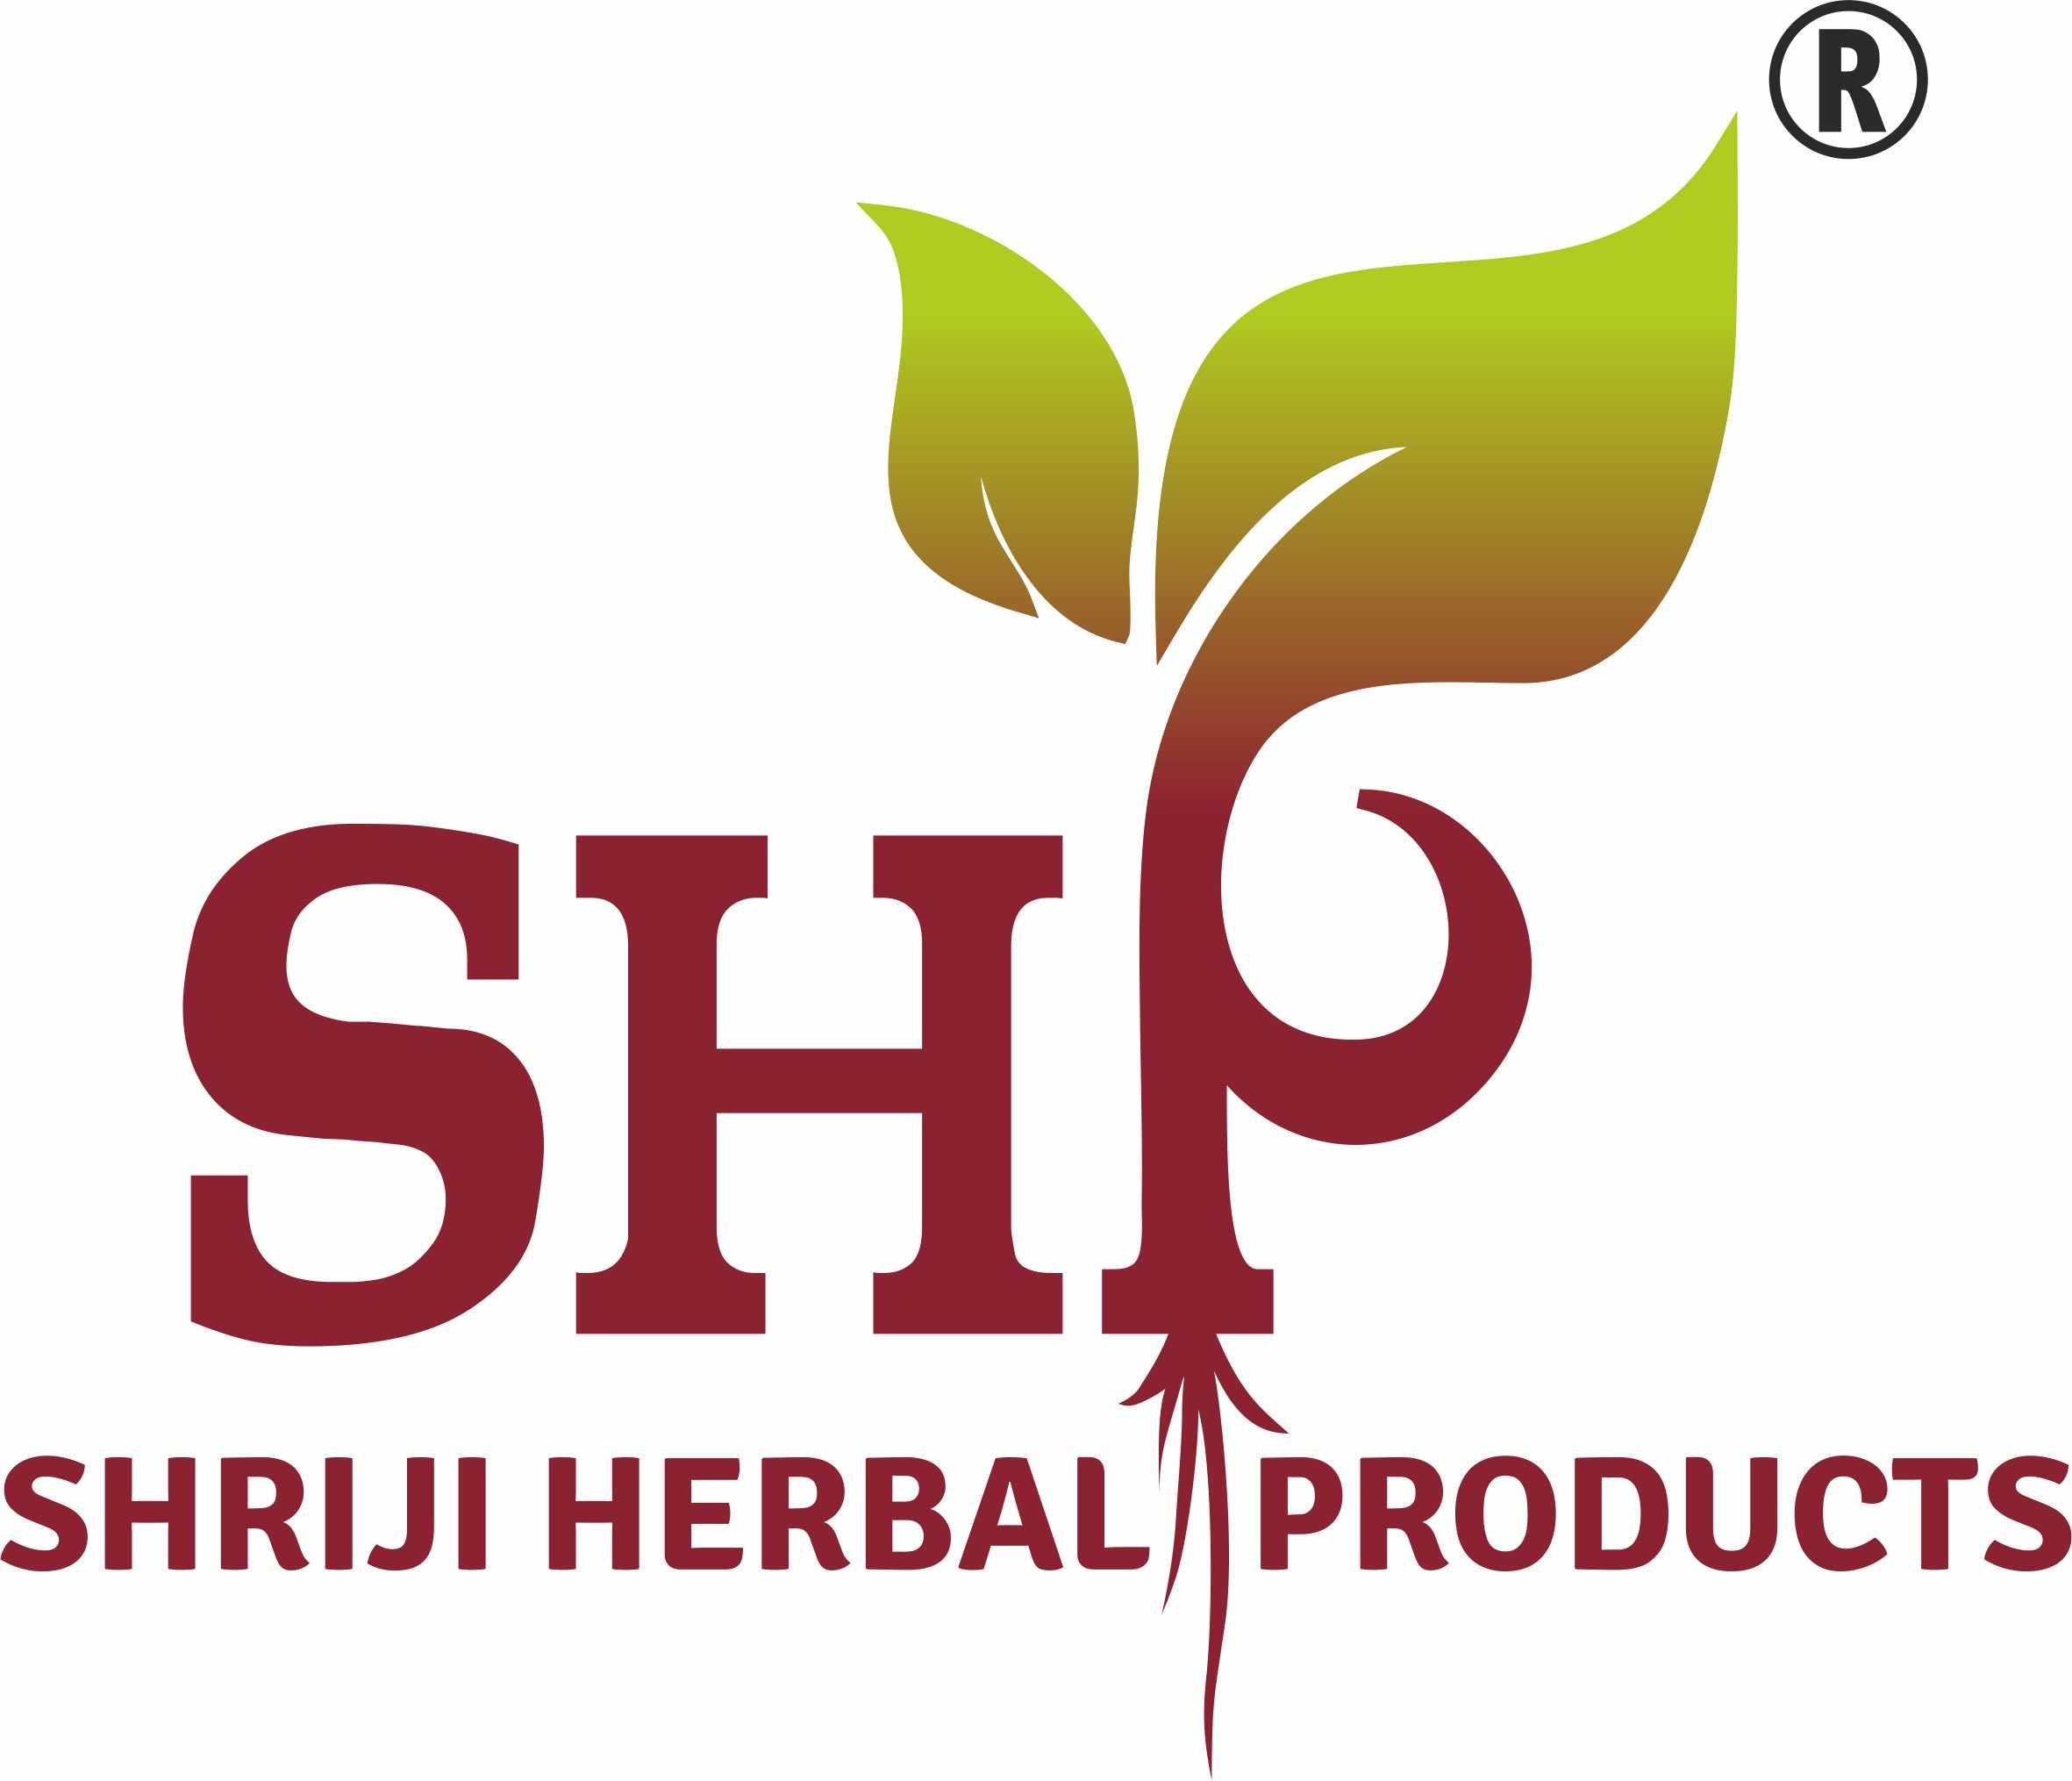 SHRIJI HERBAL PRODUCTS